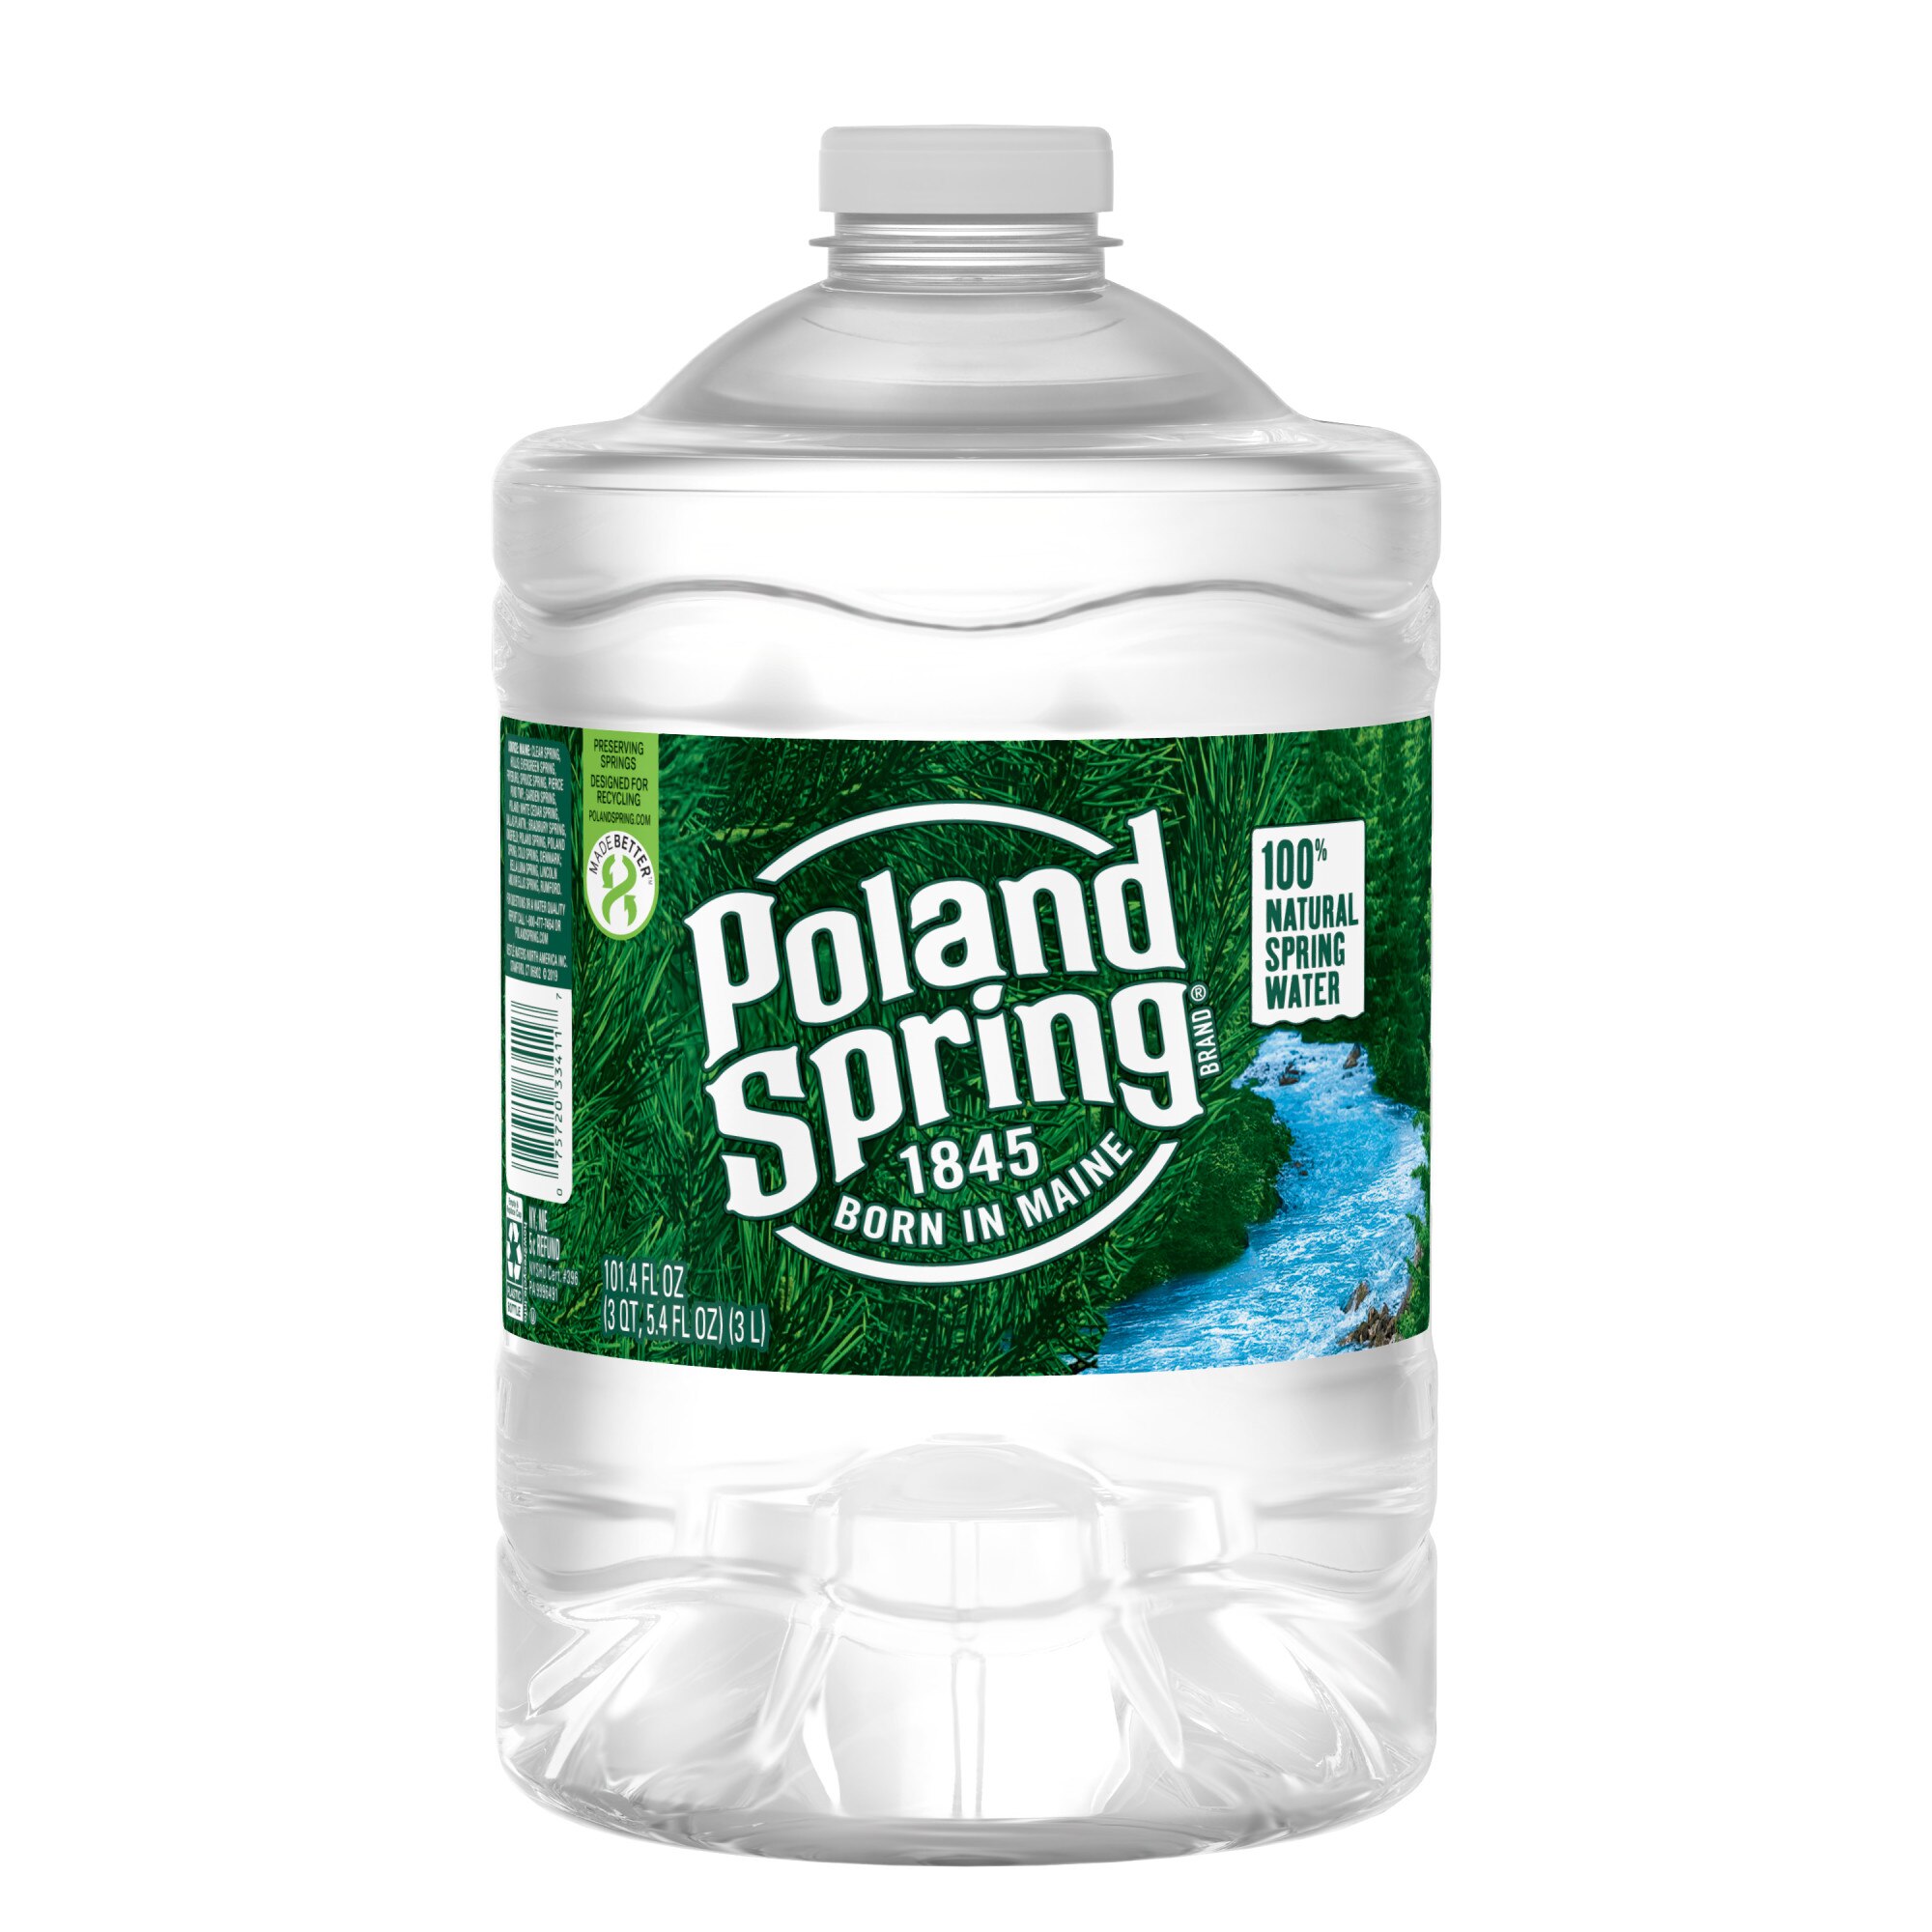 Poland Spring 100% Natural Spring Water Plastic Jug, 101.4 OZ